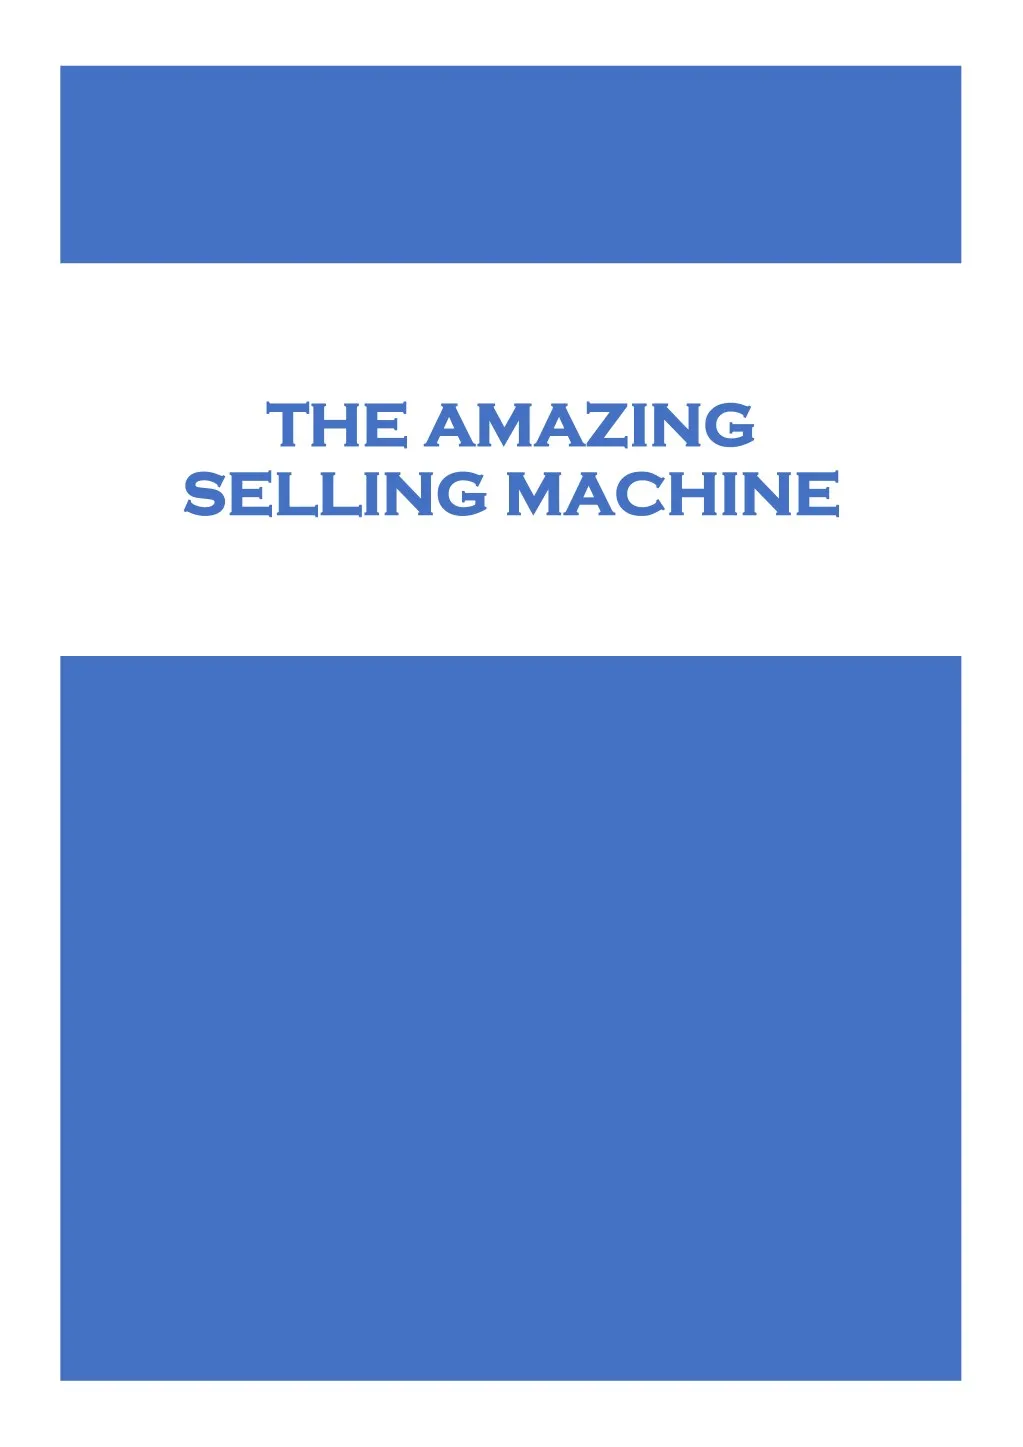 the amazing the amazing selling machine selling